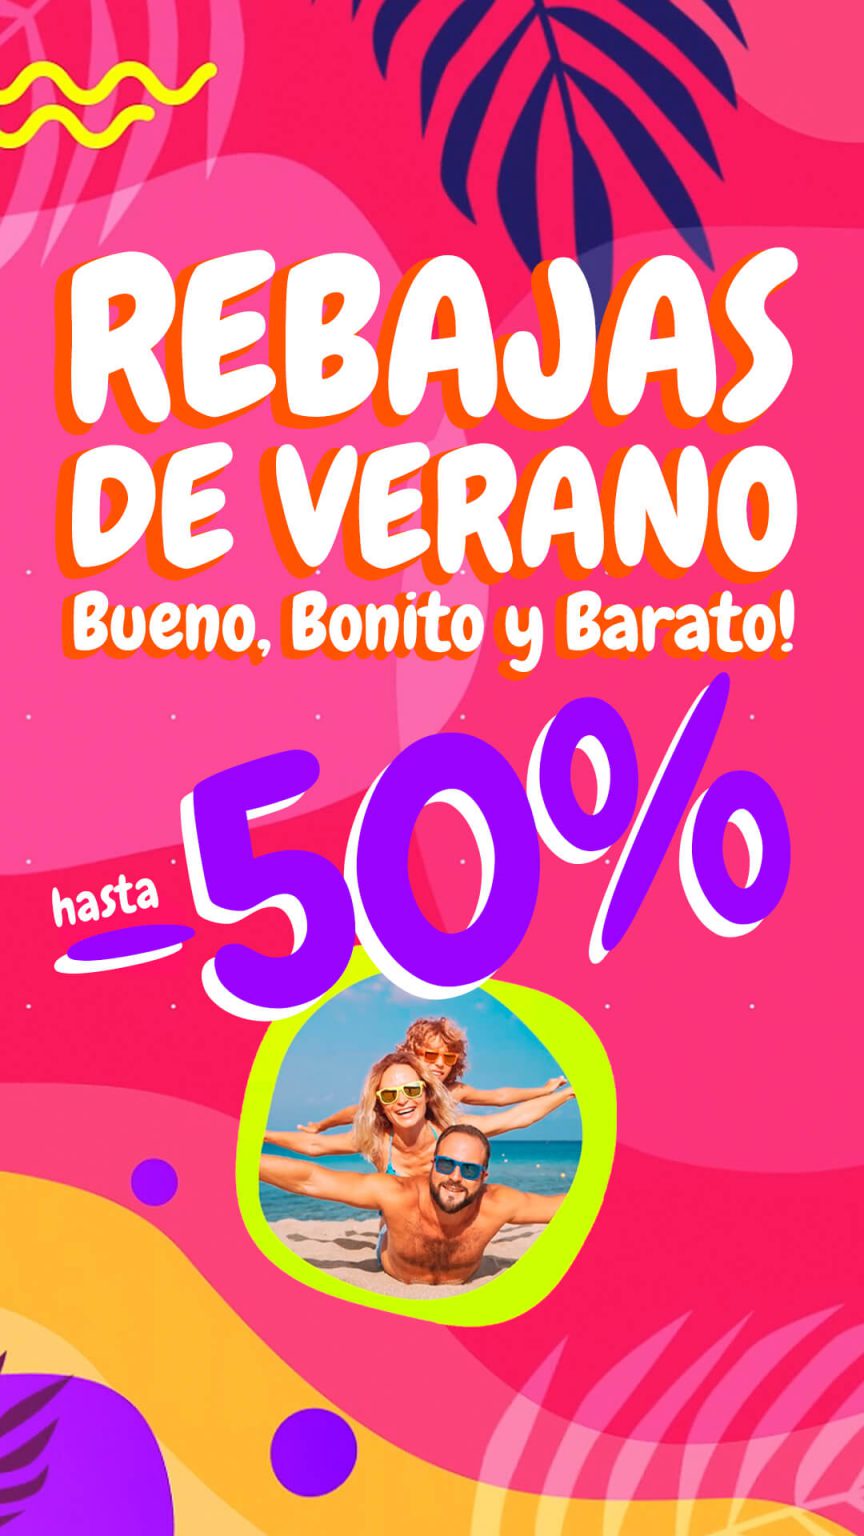 RebajasdeVerano Promo Banner Web